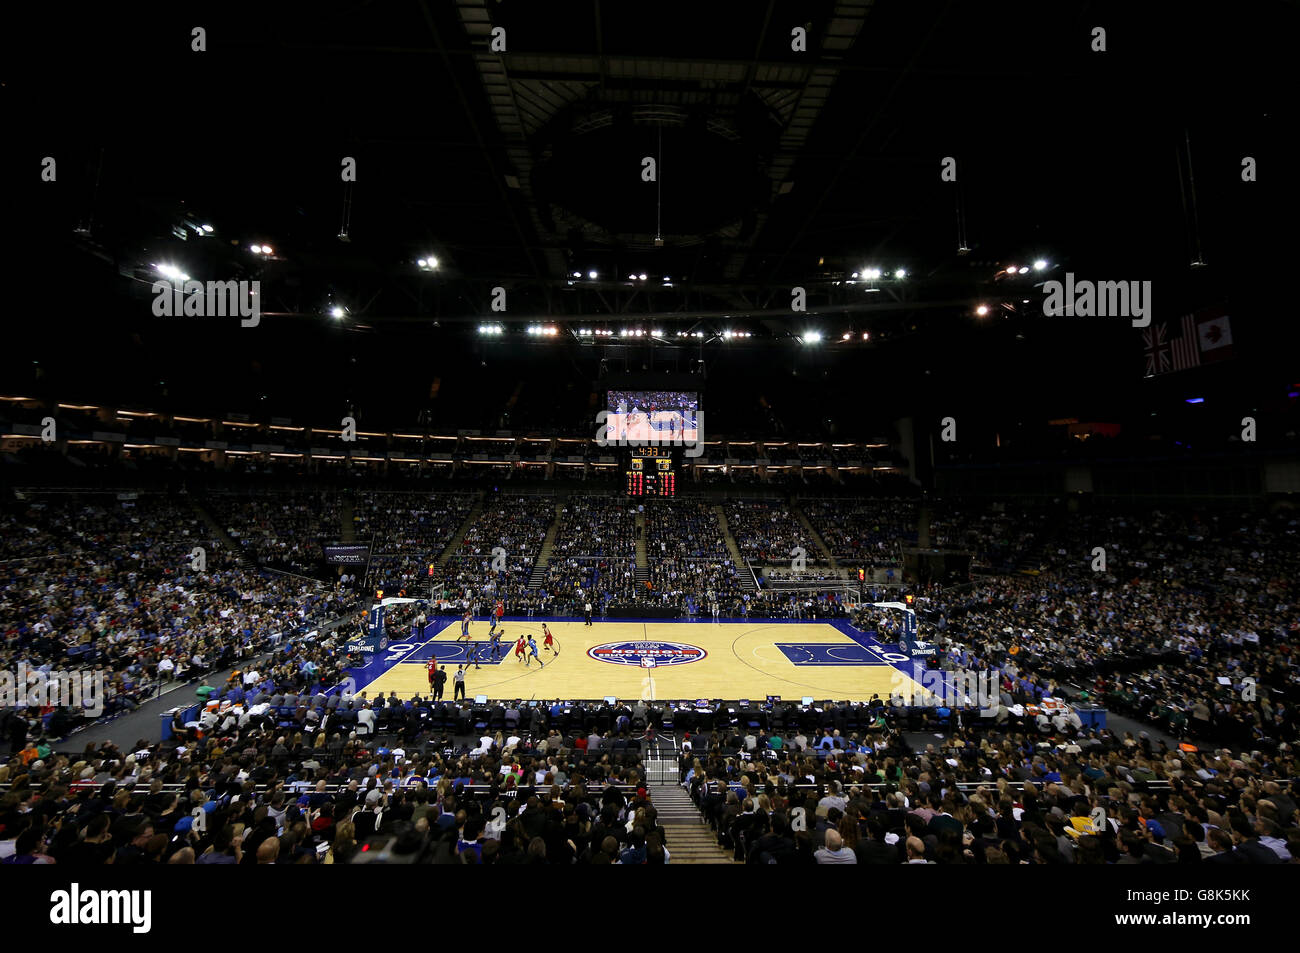 Orlando Magic v Toronto Raptors - NBA Global Games - O2 Arena. General view of the NBA Global Games match at the O2 Arena, London. Stock Photo